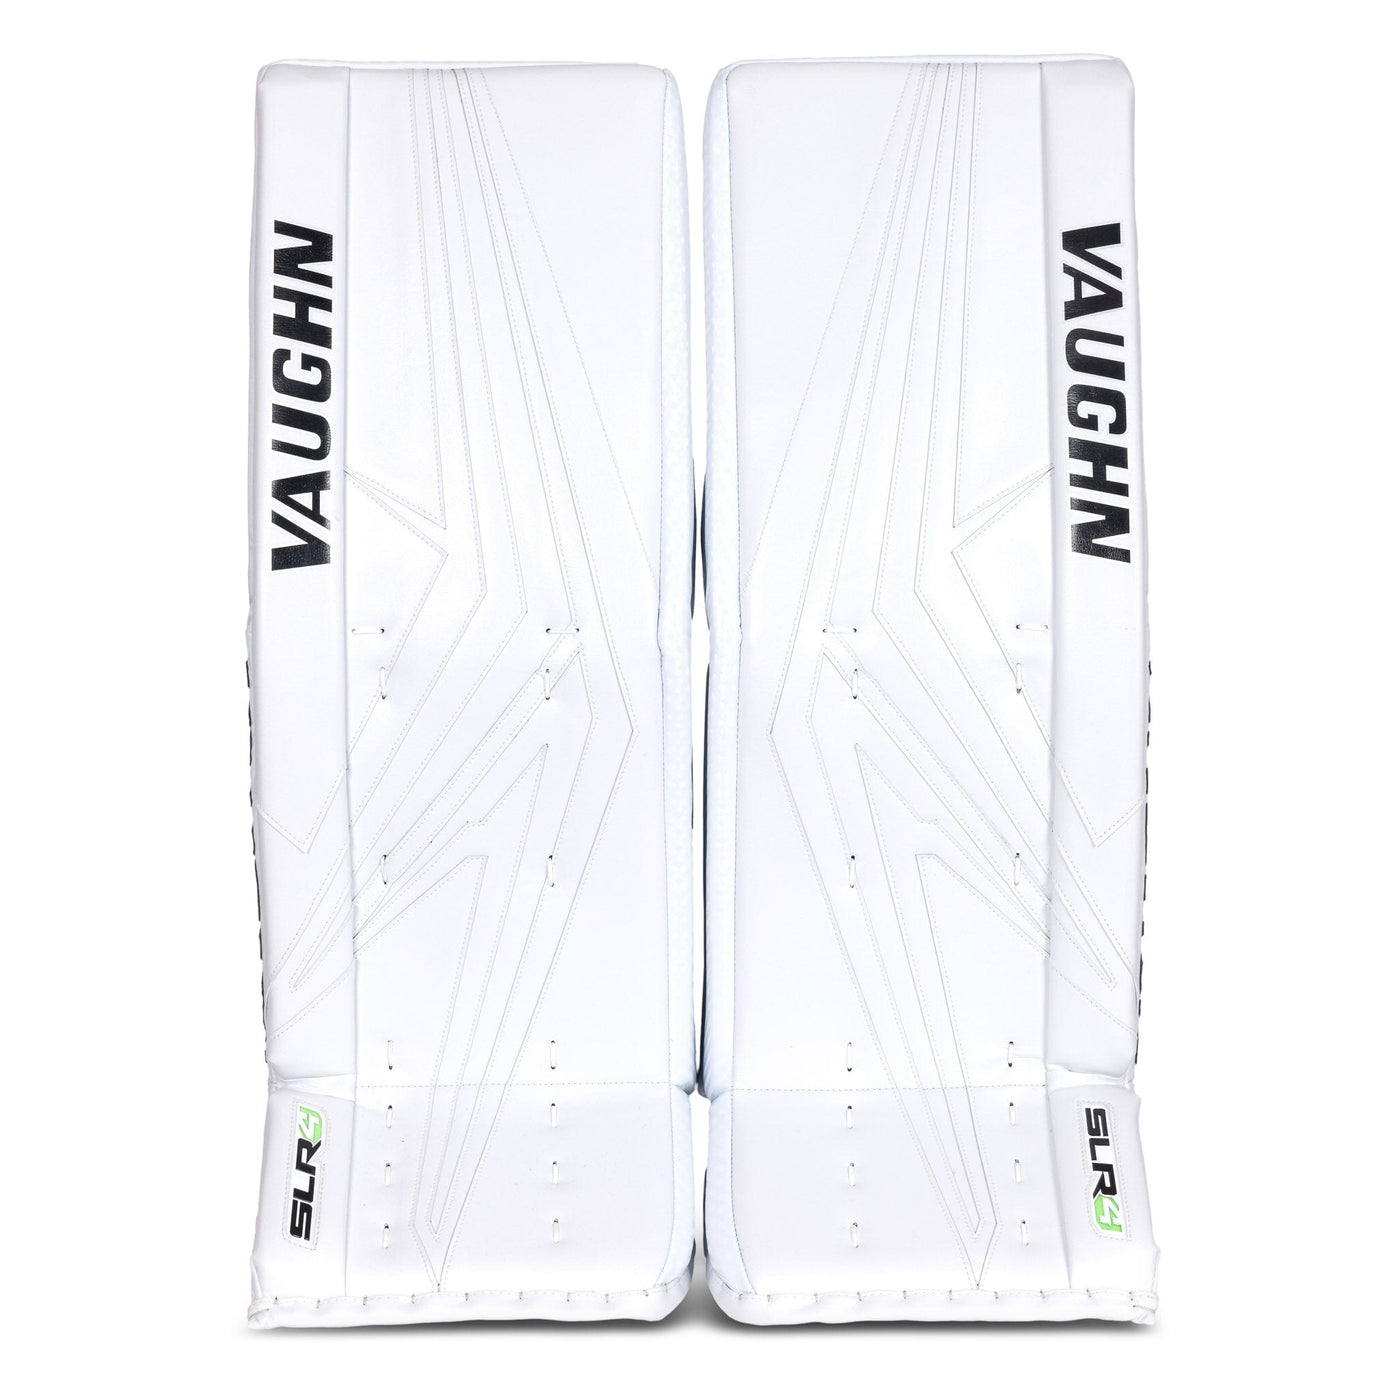 Vaughn Ventus SLR4 Pro Carbon Senior Goalie Leg Pads - TheHockeyShop.com